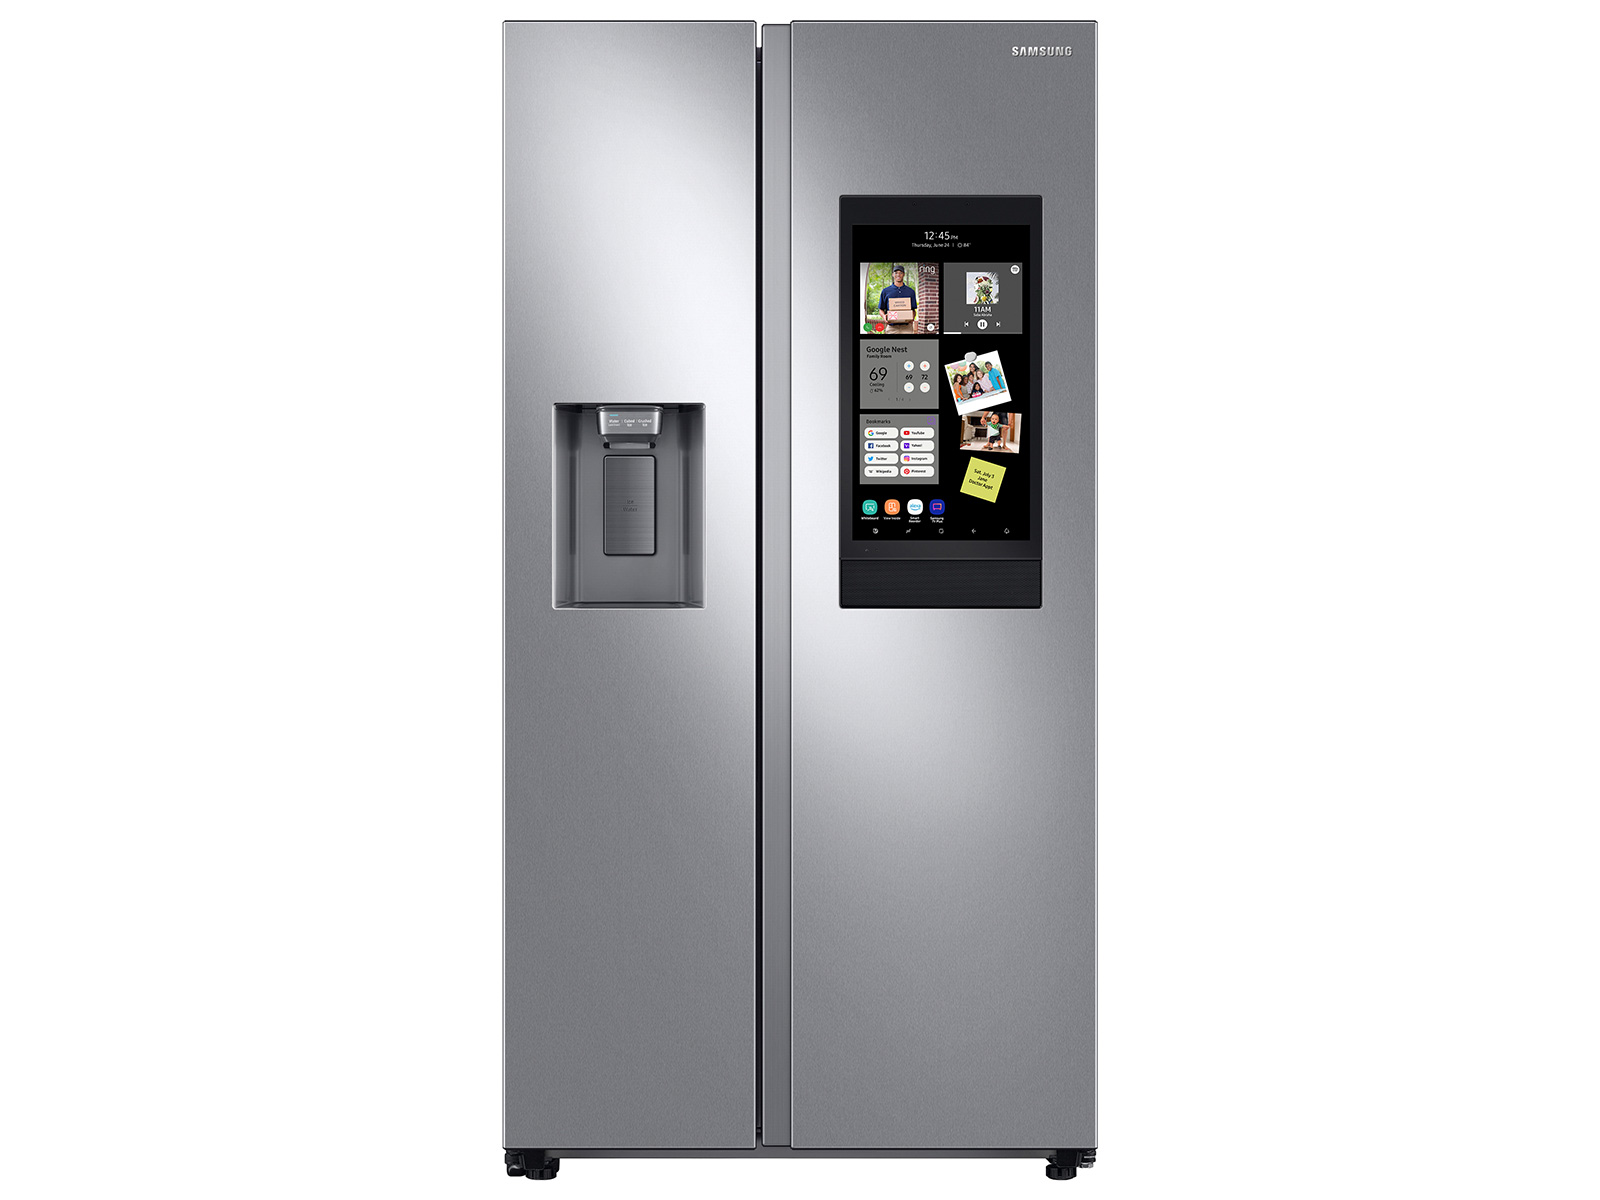 Big Chill Refrigerator Reviews: Unbiased Insights & Scores